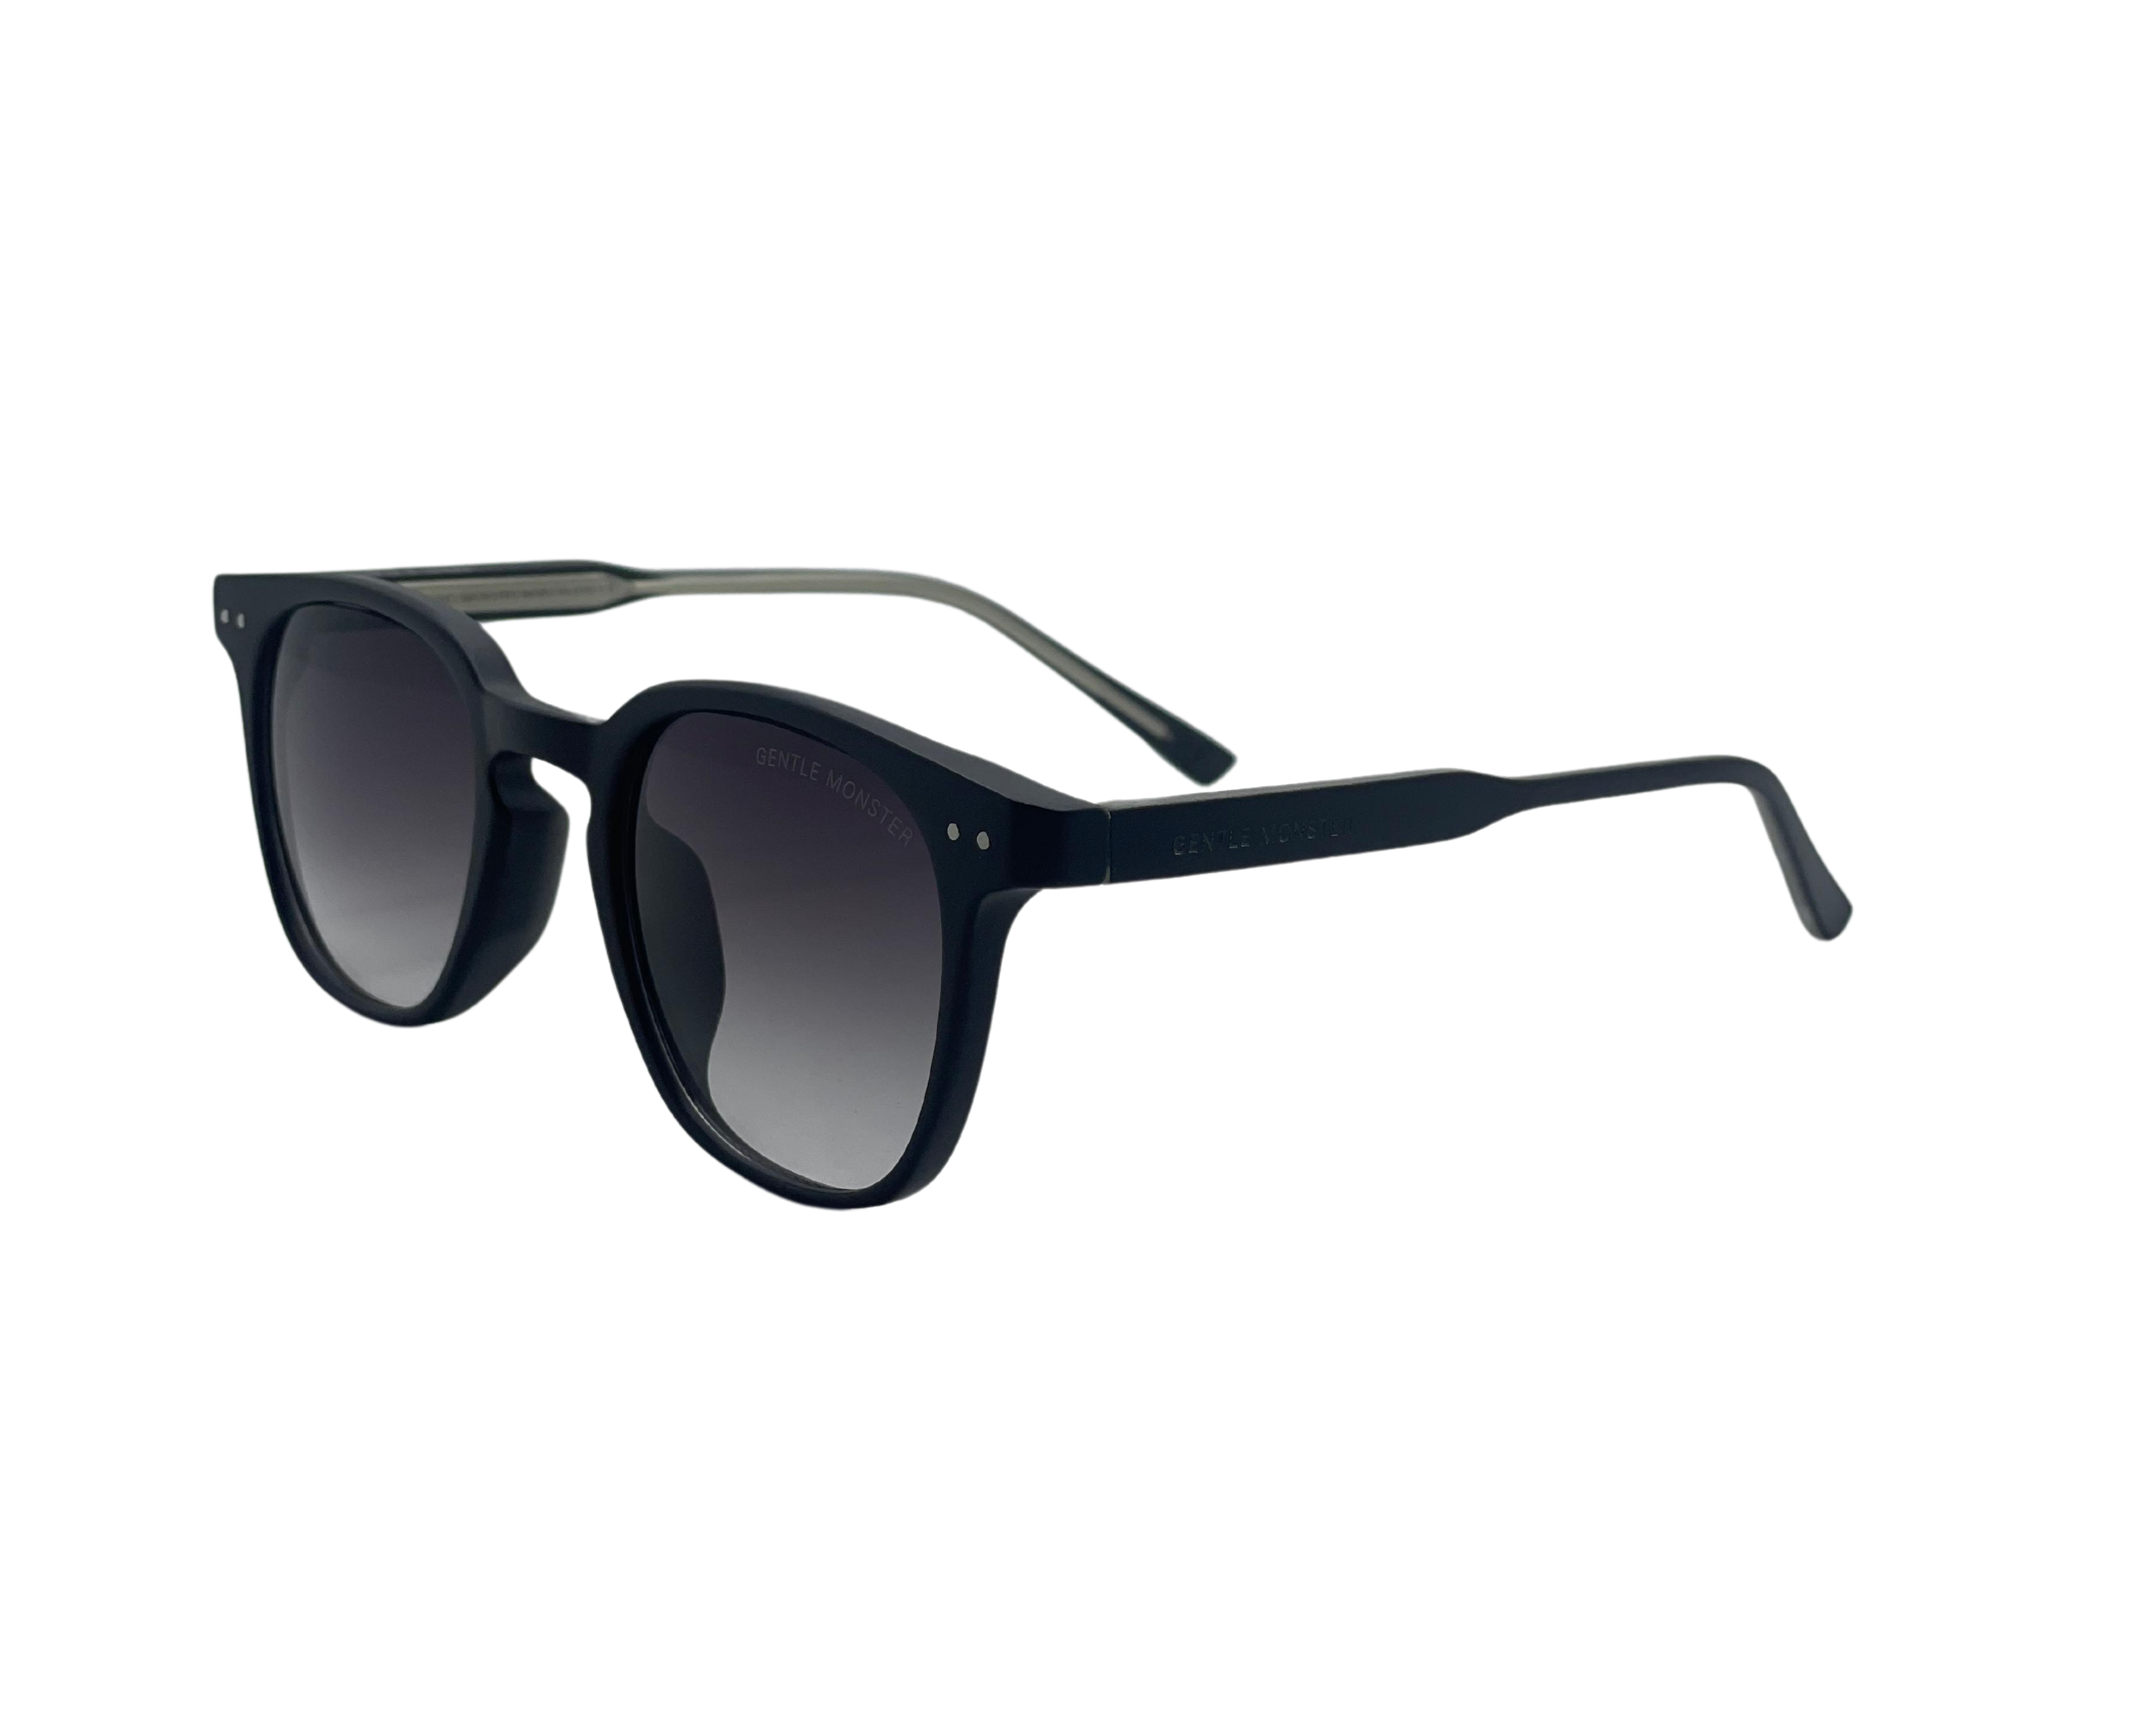 NS Deluxe - 6265 - Matte Black - Sunglasses